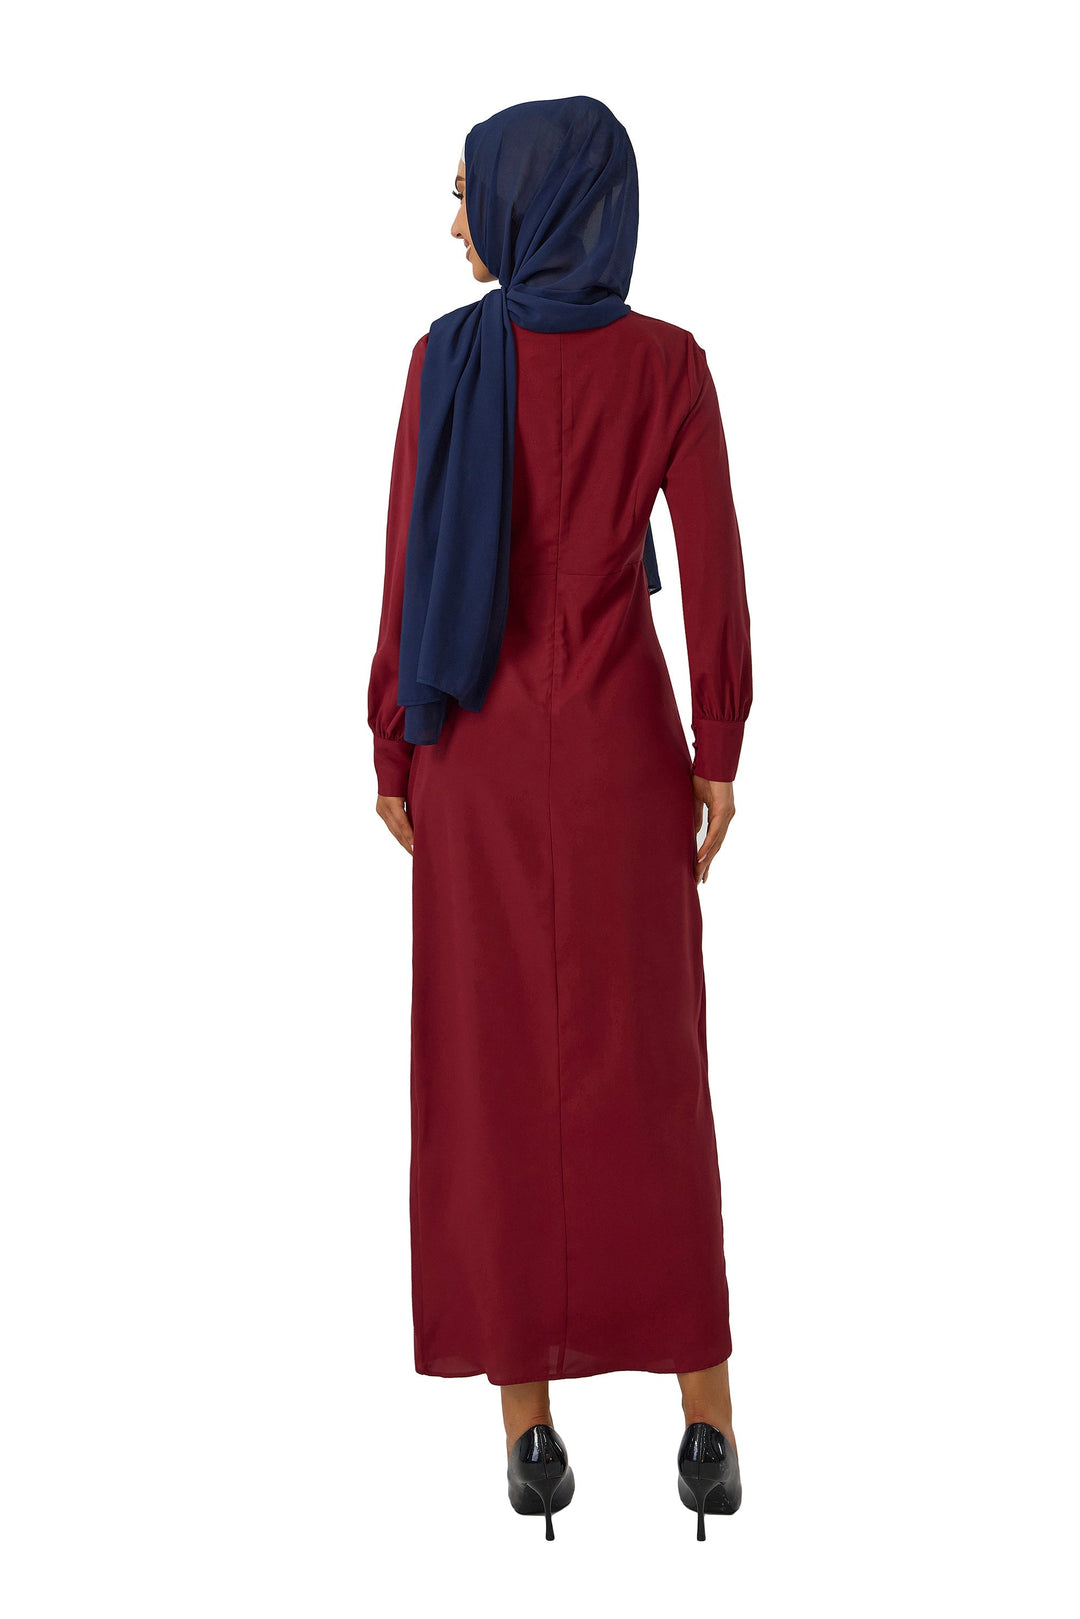 Urban Modesty - Navy Blue Chiffon Hijab